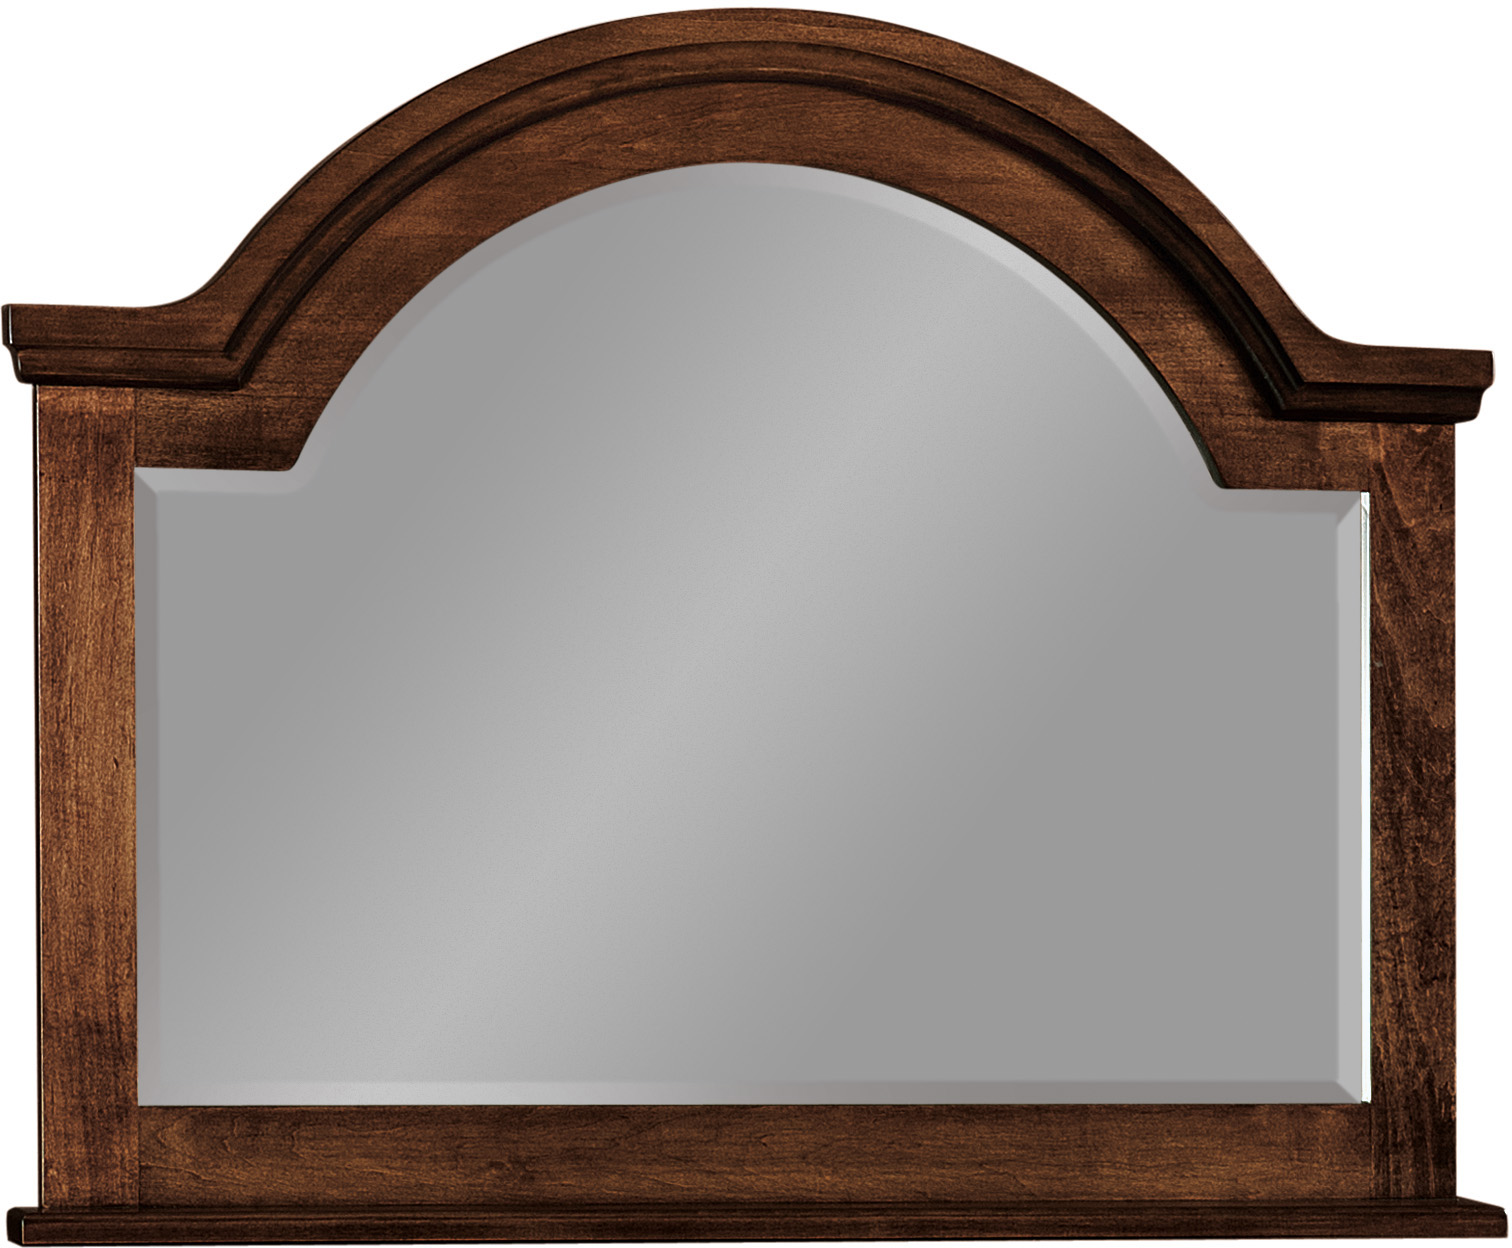 Solid-Wood Dresser Mirrors